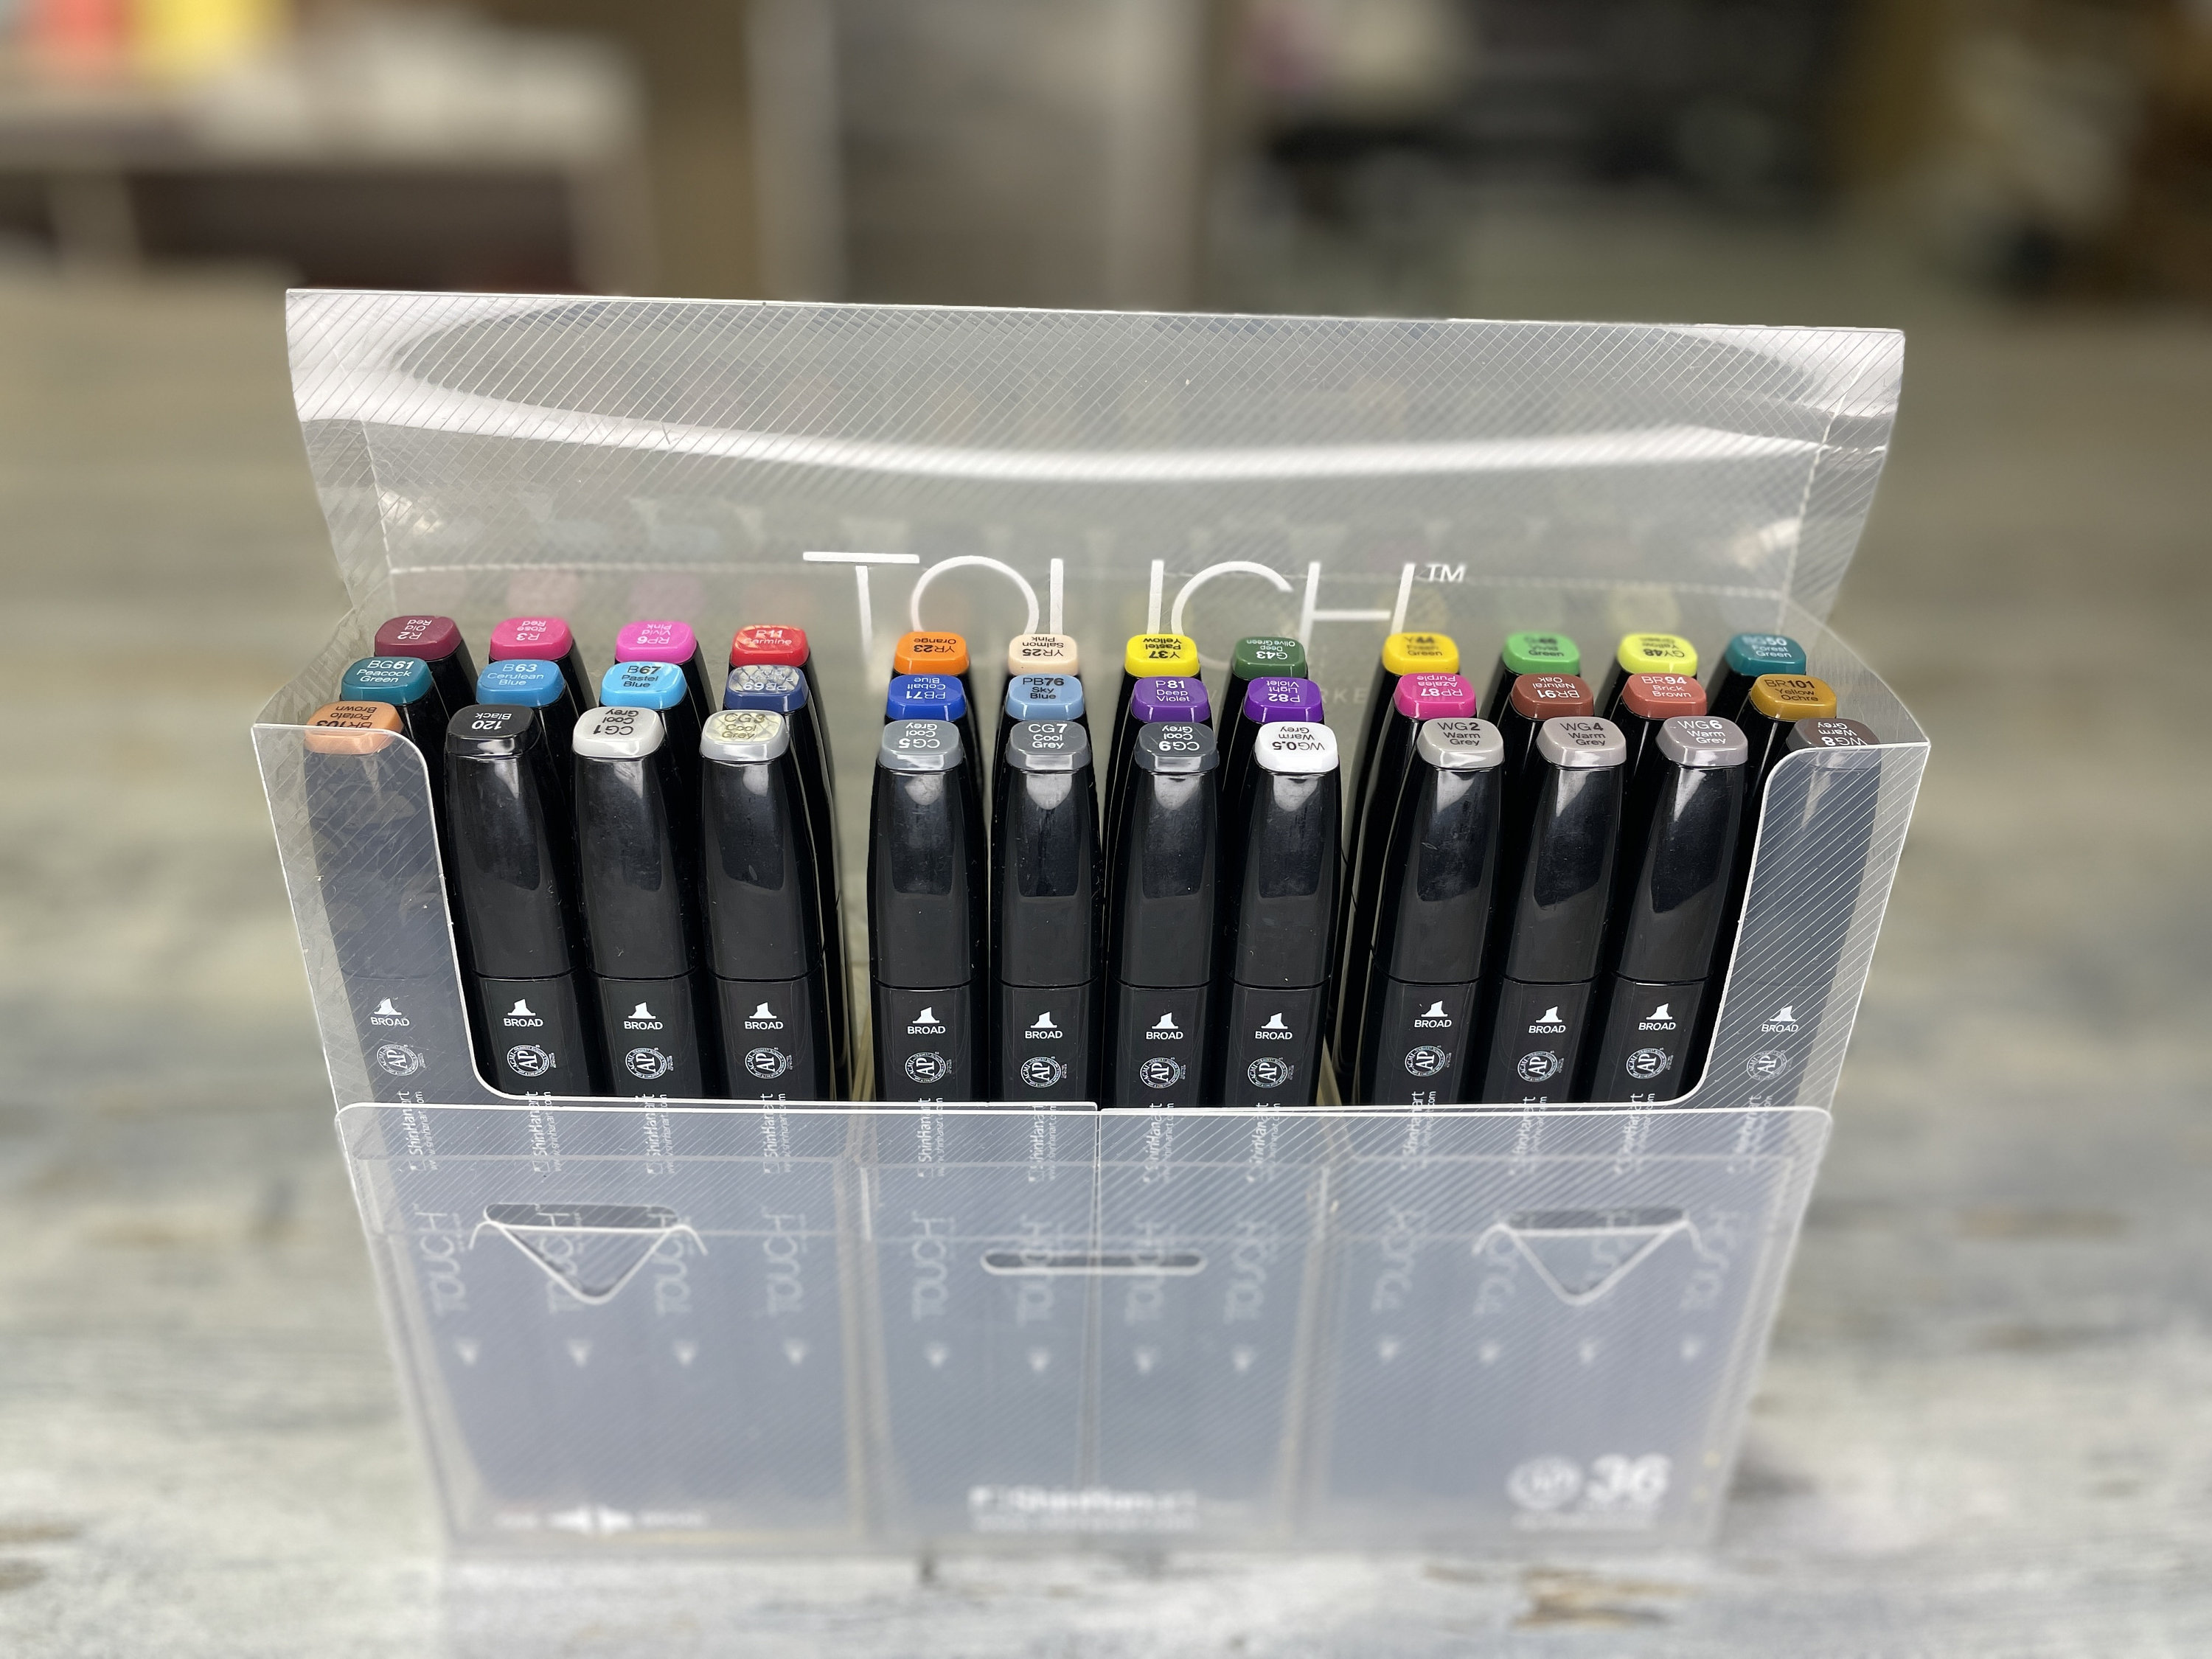 Shinhan Touch Twin 12 Brush Marker Set Skin Tones